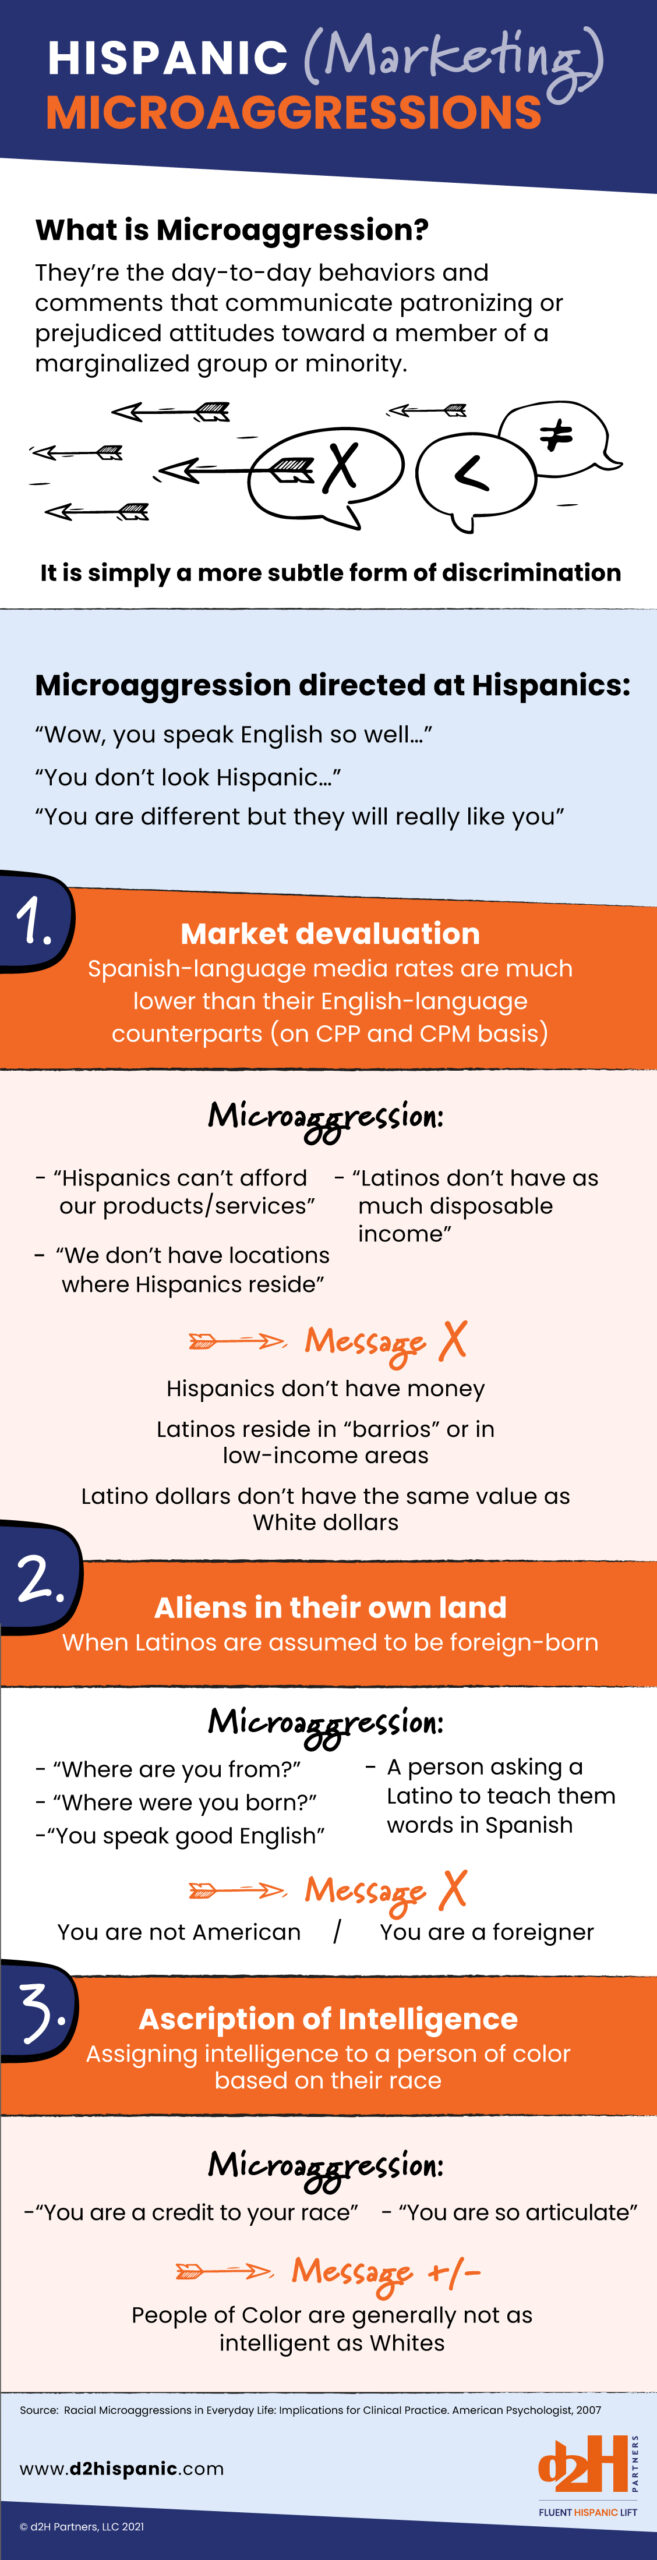 Hispanic Marketing Microaggressions - Infographic